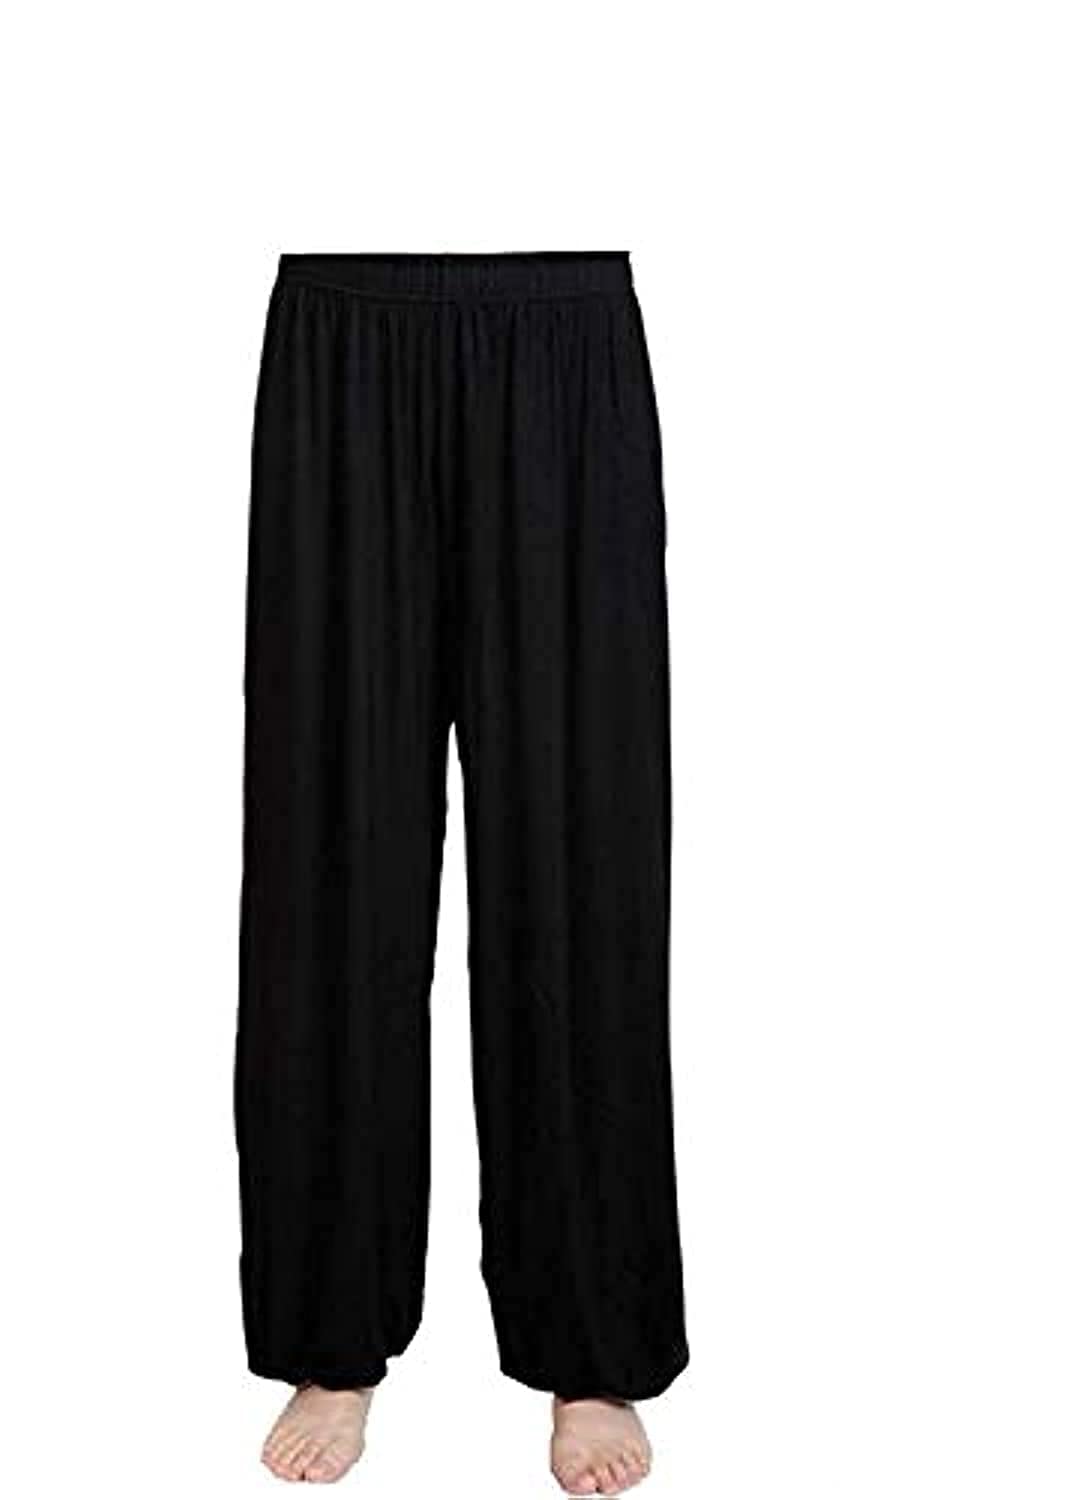 Men's long black loose dance Pants Gigong pants Tai Chi yoga pants Color Black Size XL